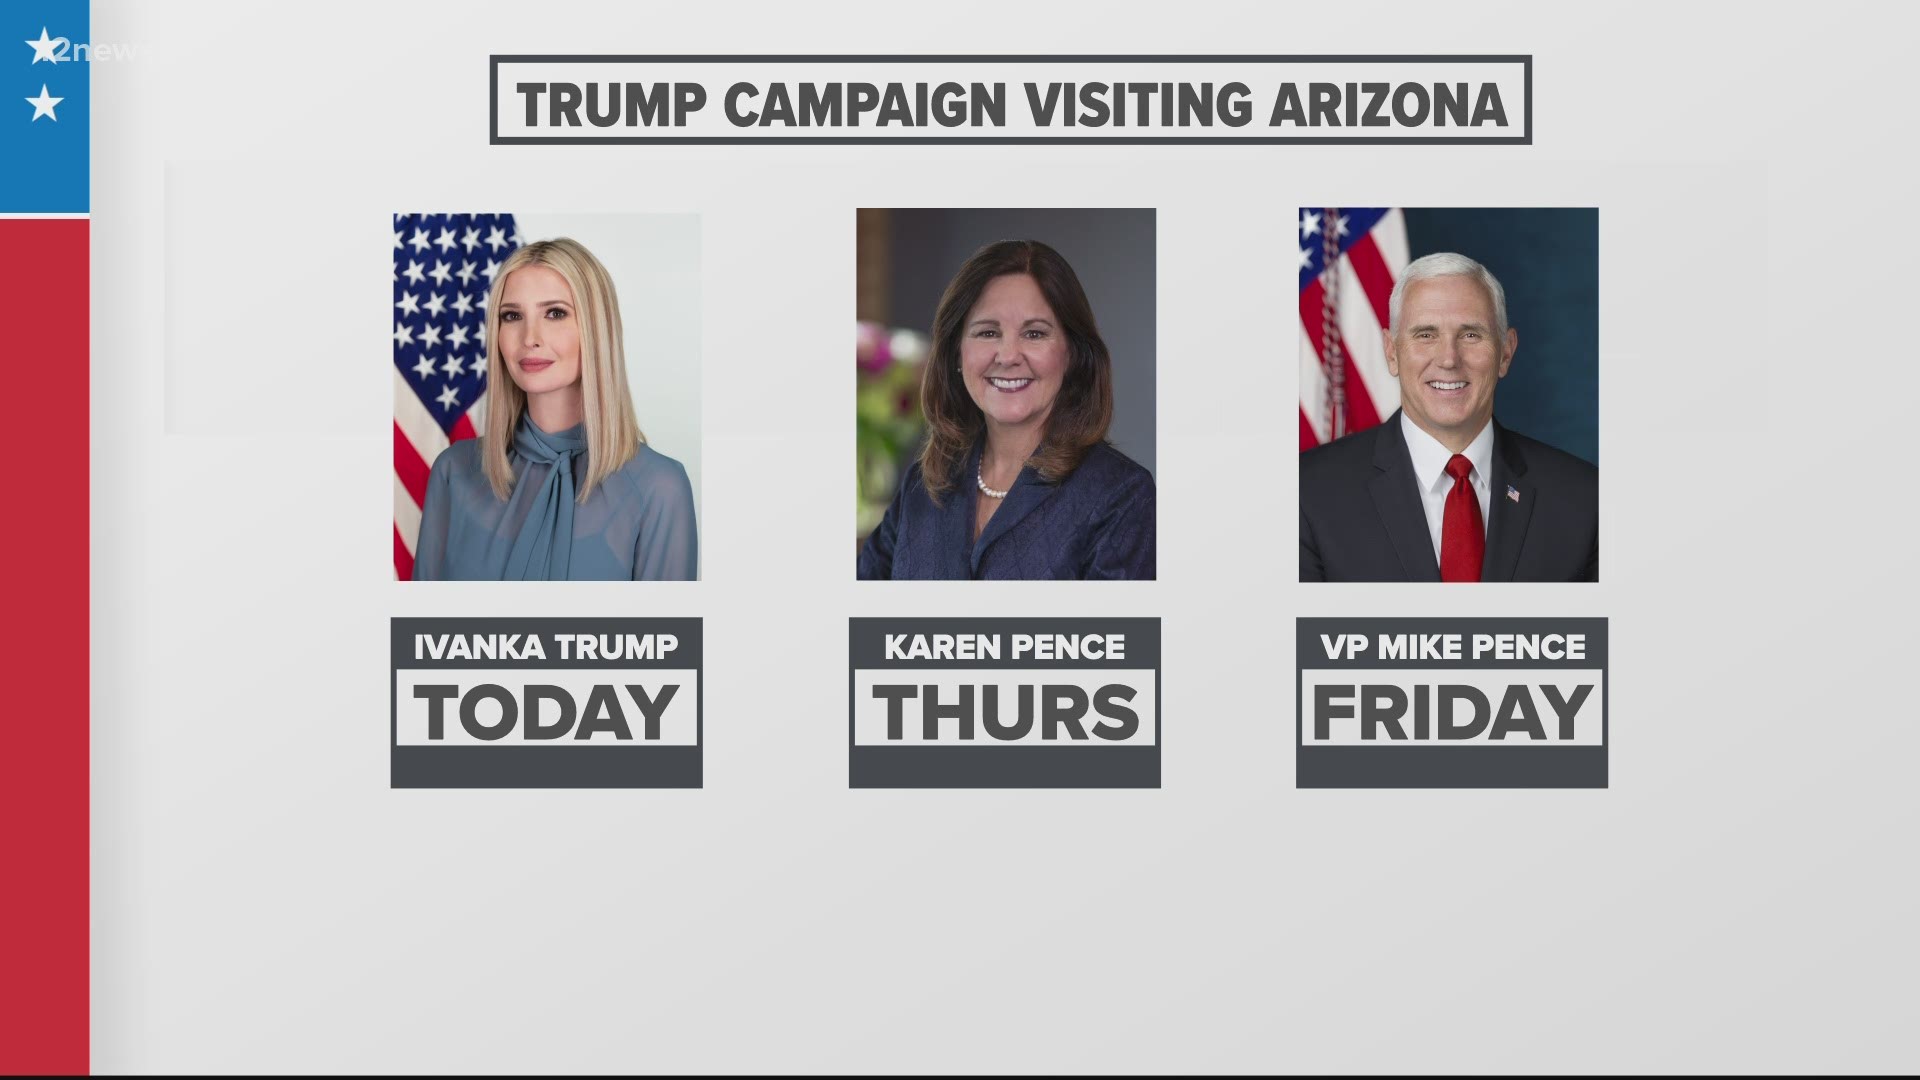 Ivanka Trump is visiting Phoenix on Wednesday in the latest visit to Arizona by the Trump campaign. Team 12's Matt Yurus has the latest.